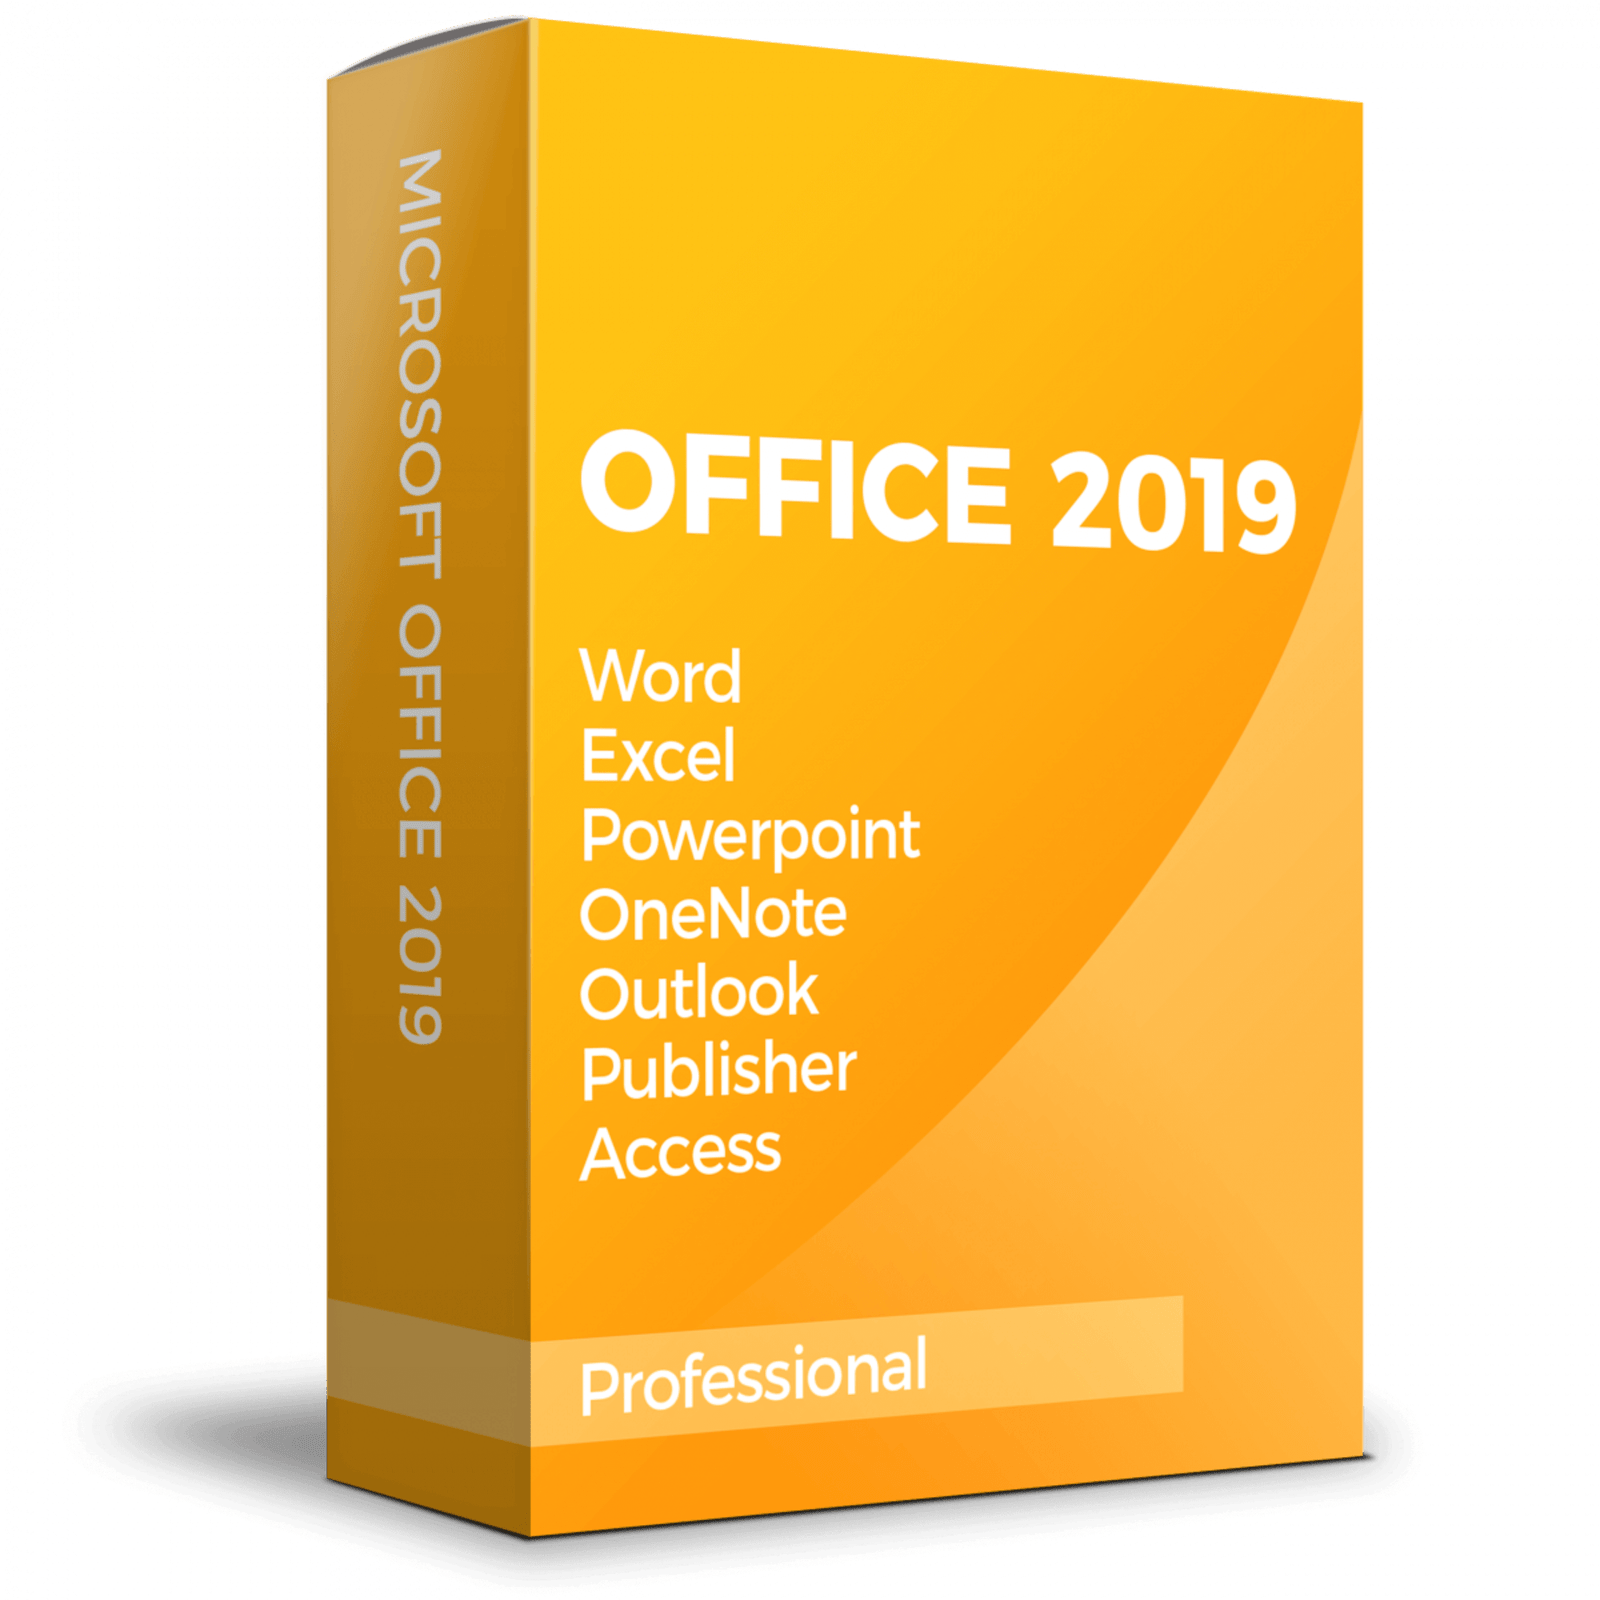 Microsoft Office 2019 Professional Plus (PC) 32/64 Bits (Retail)